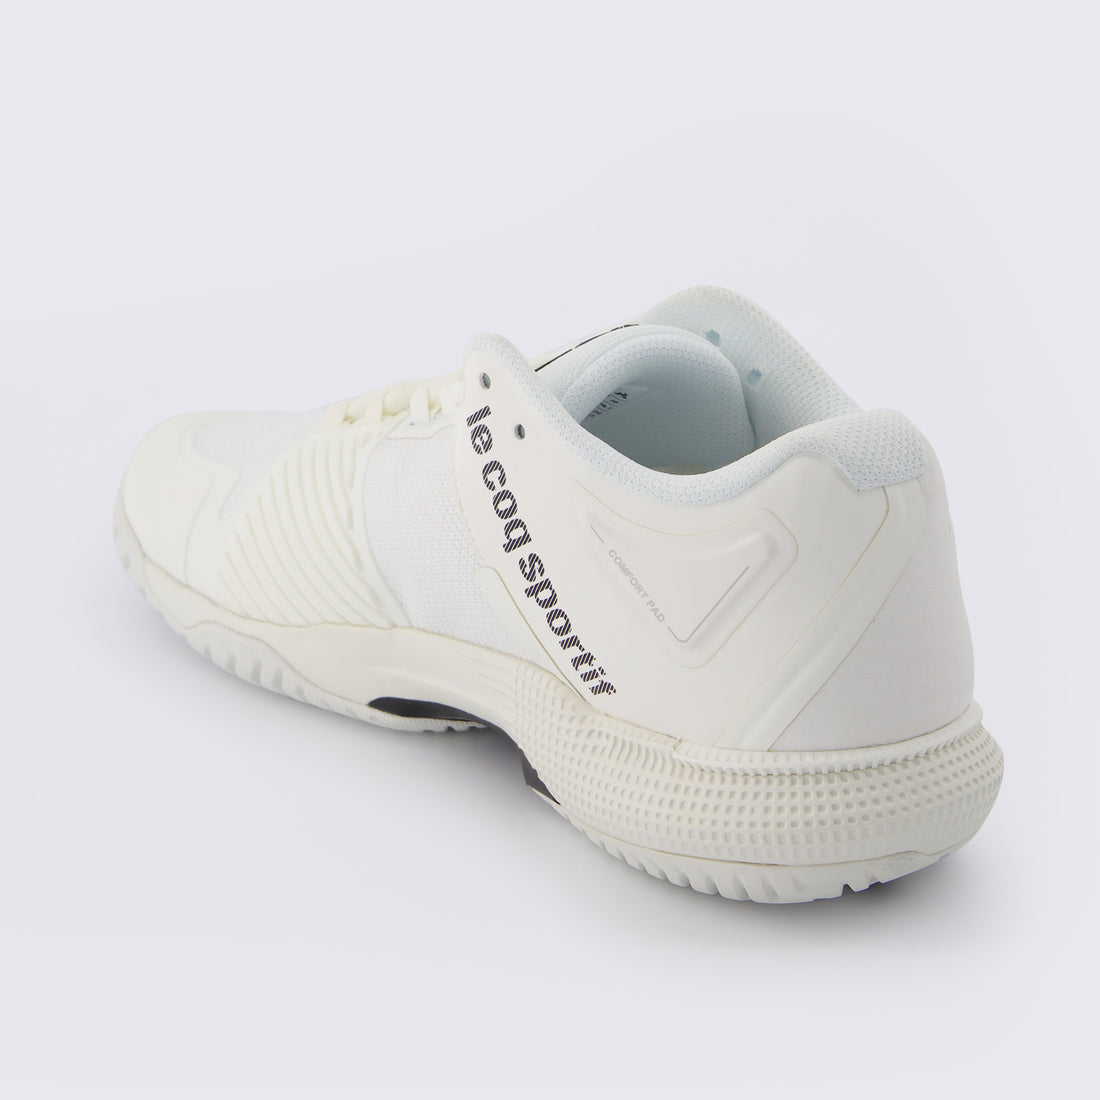 2210976-FUTUR LCS T01 ALL COURT bright white  | Shoes de tennis FUTUR LCS T01 ALL COURT Unisex